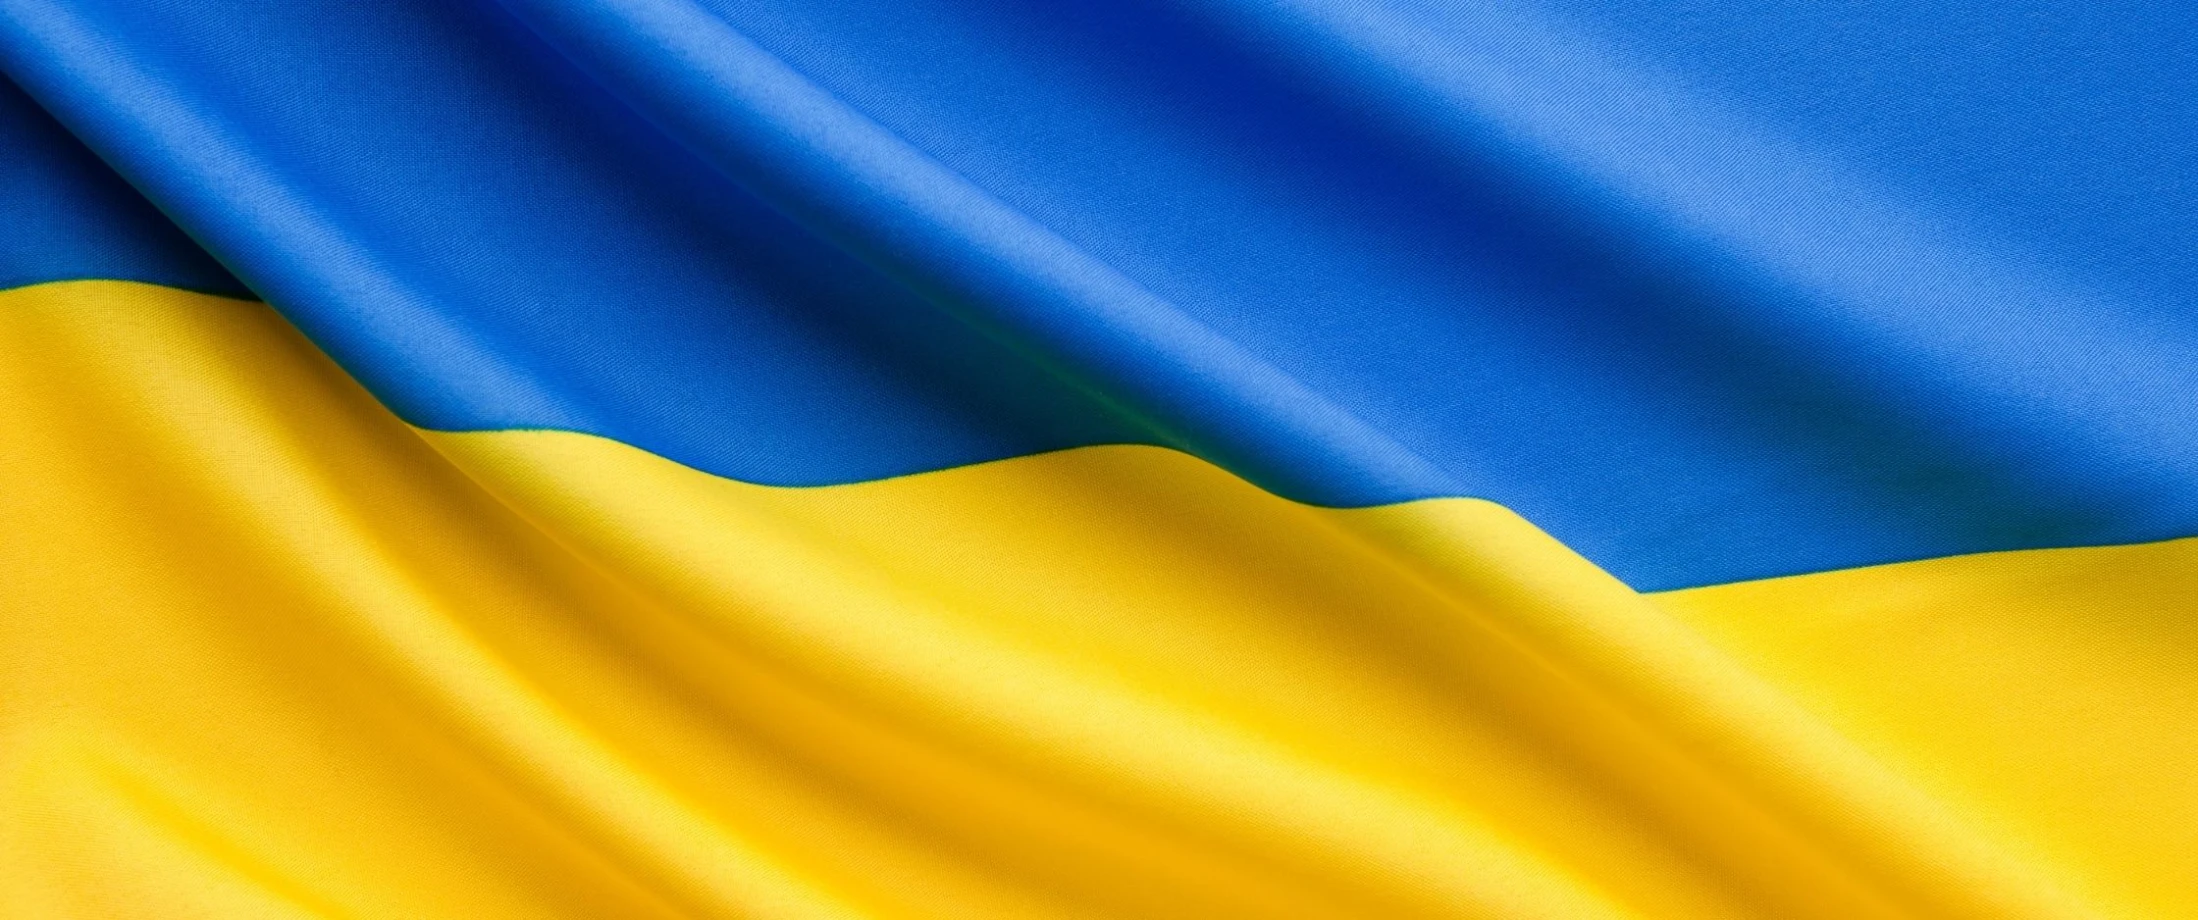 Intercede for Ukraine